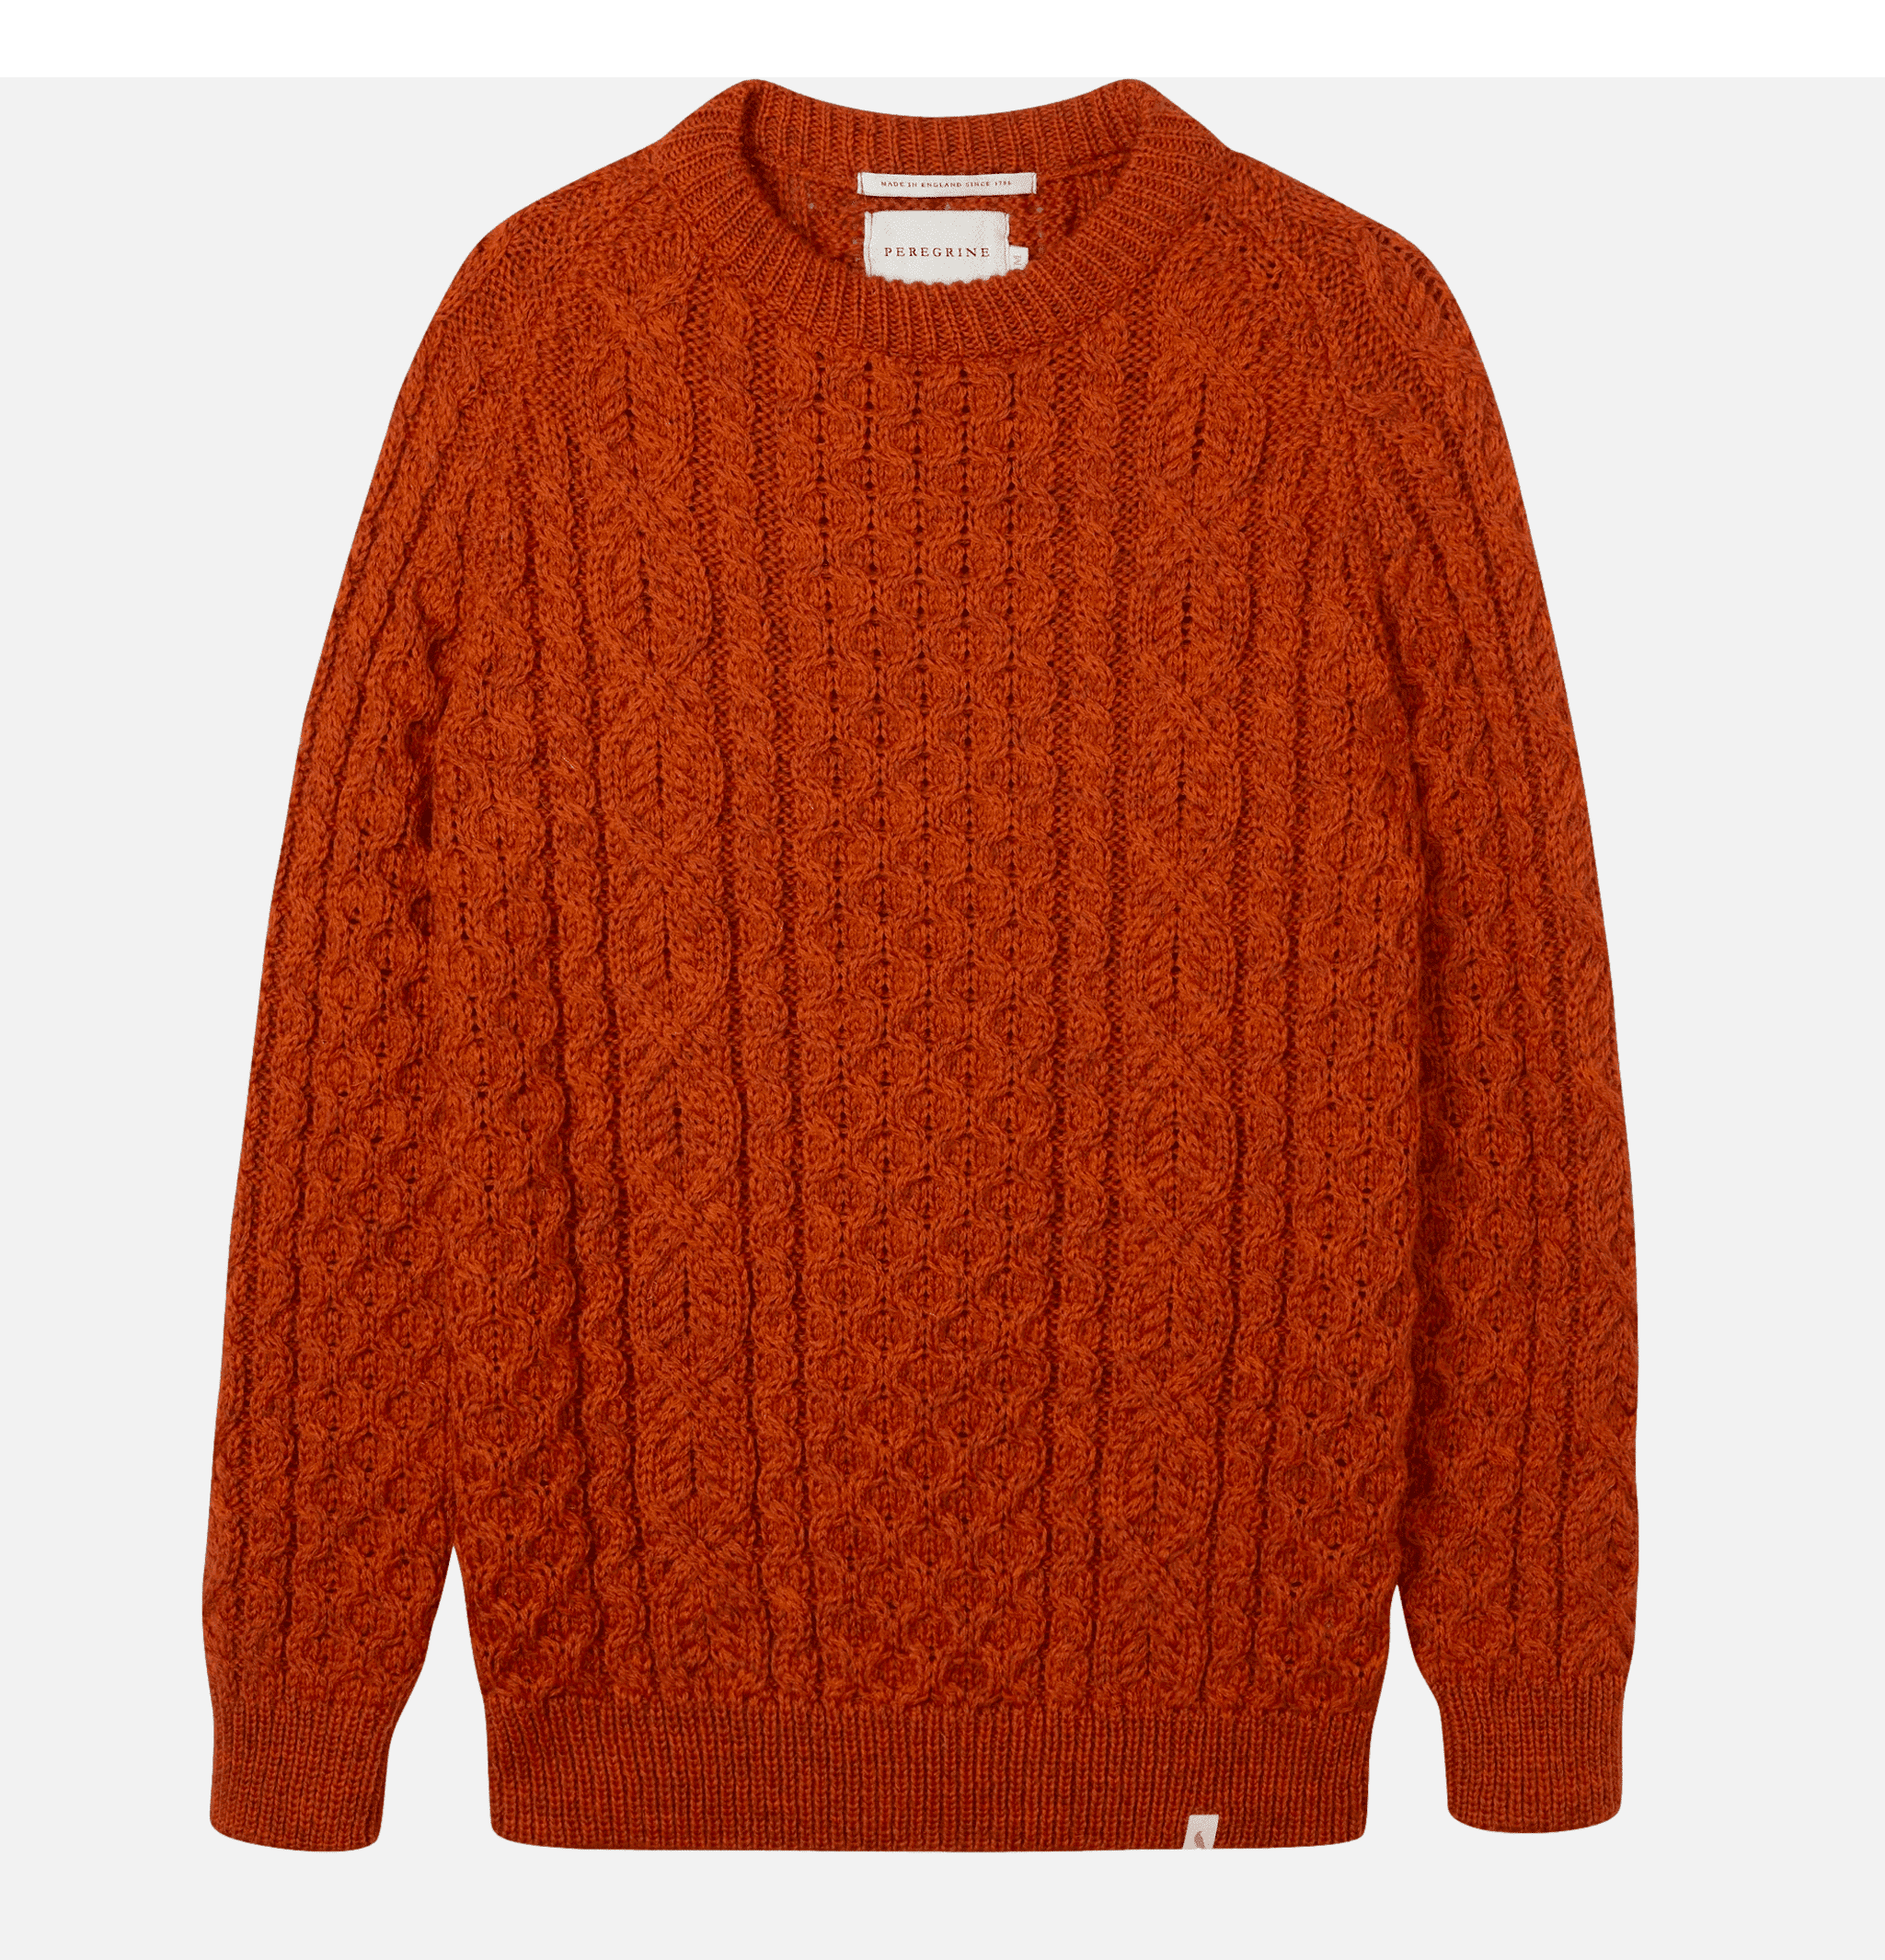 Peregrine Hudson Aran Sweater Orange